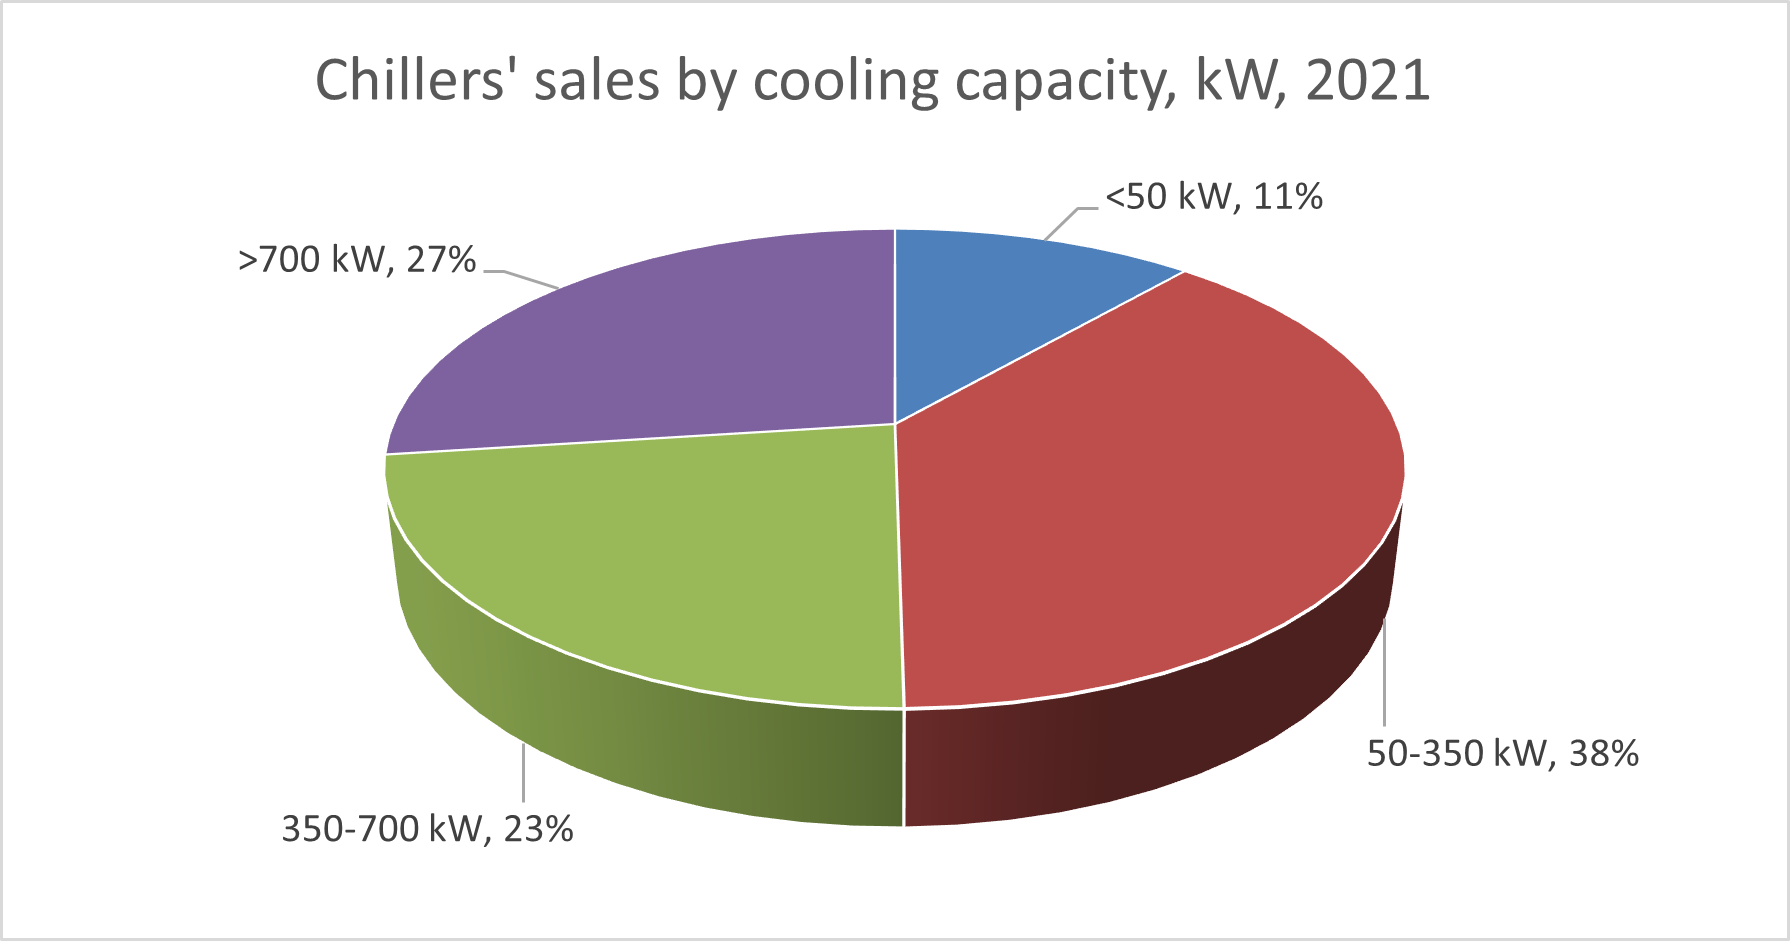 Ventas de enfriadoras por potencia frigorífica (porcentaje en kW), EU 28 - 2021, de Eurovent Market intelligence